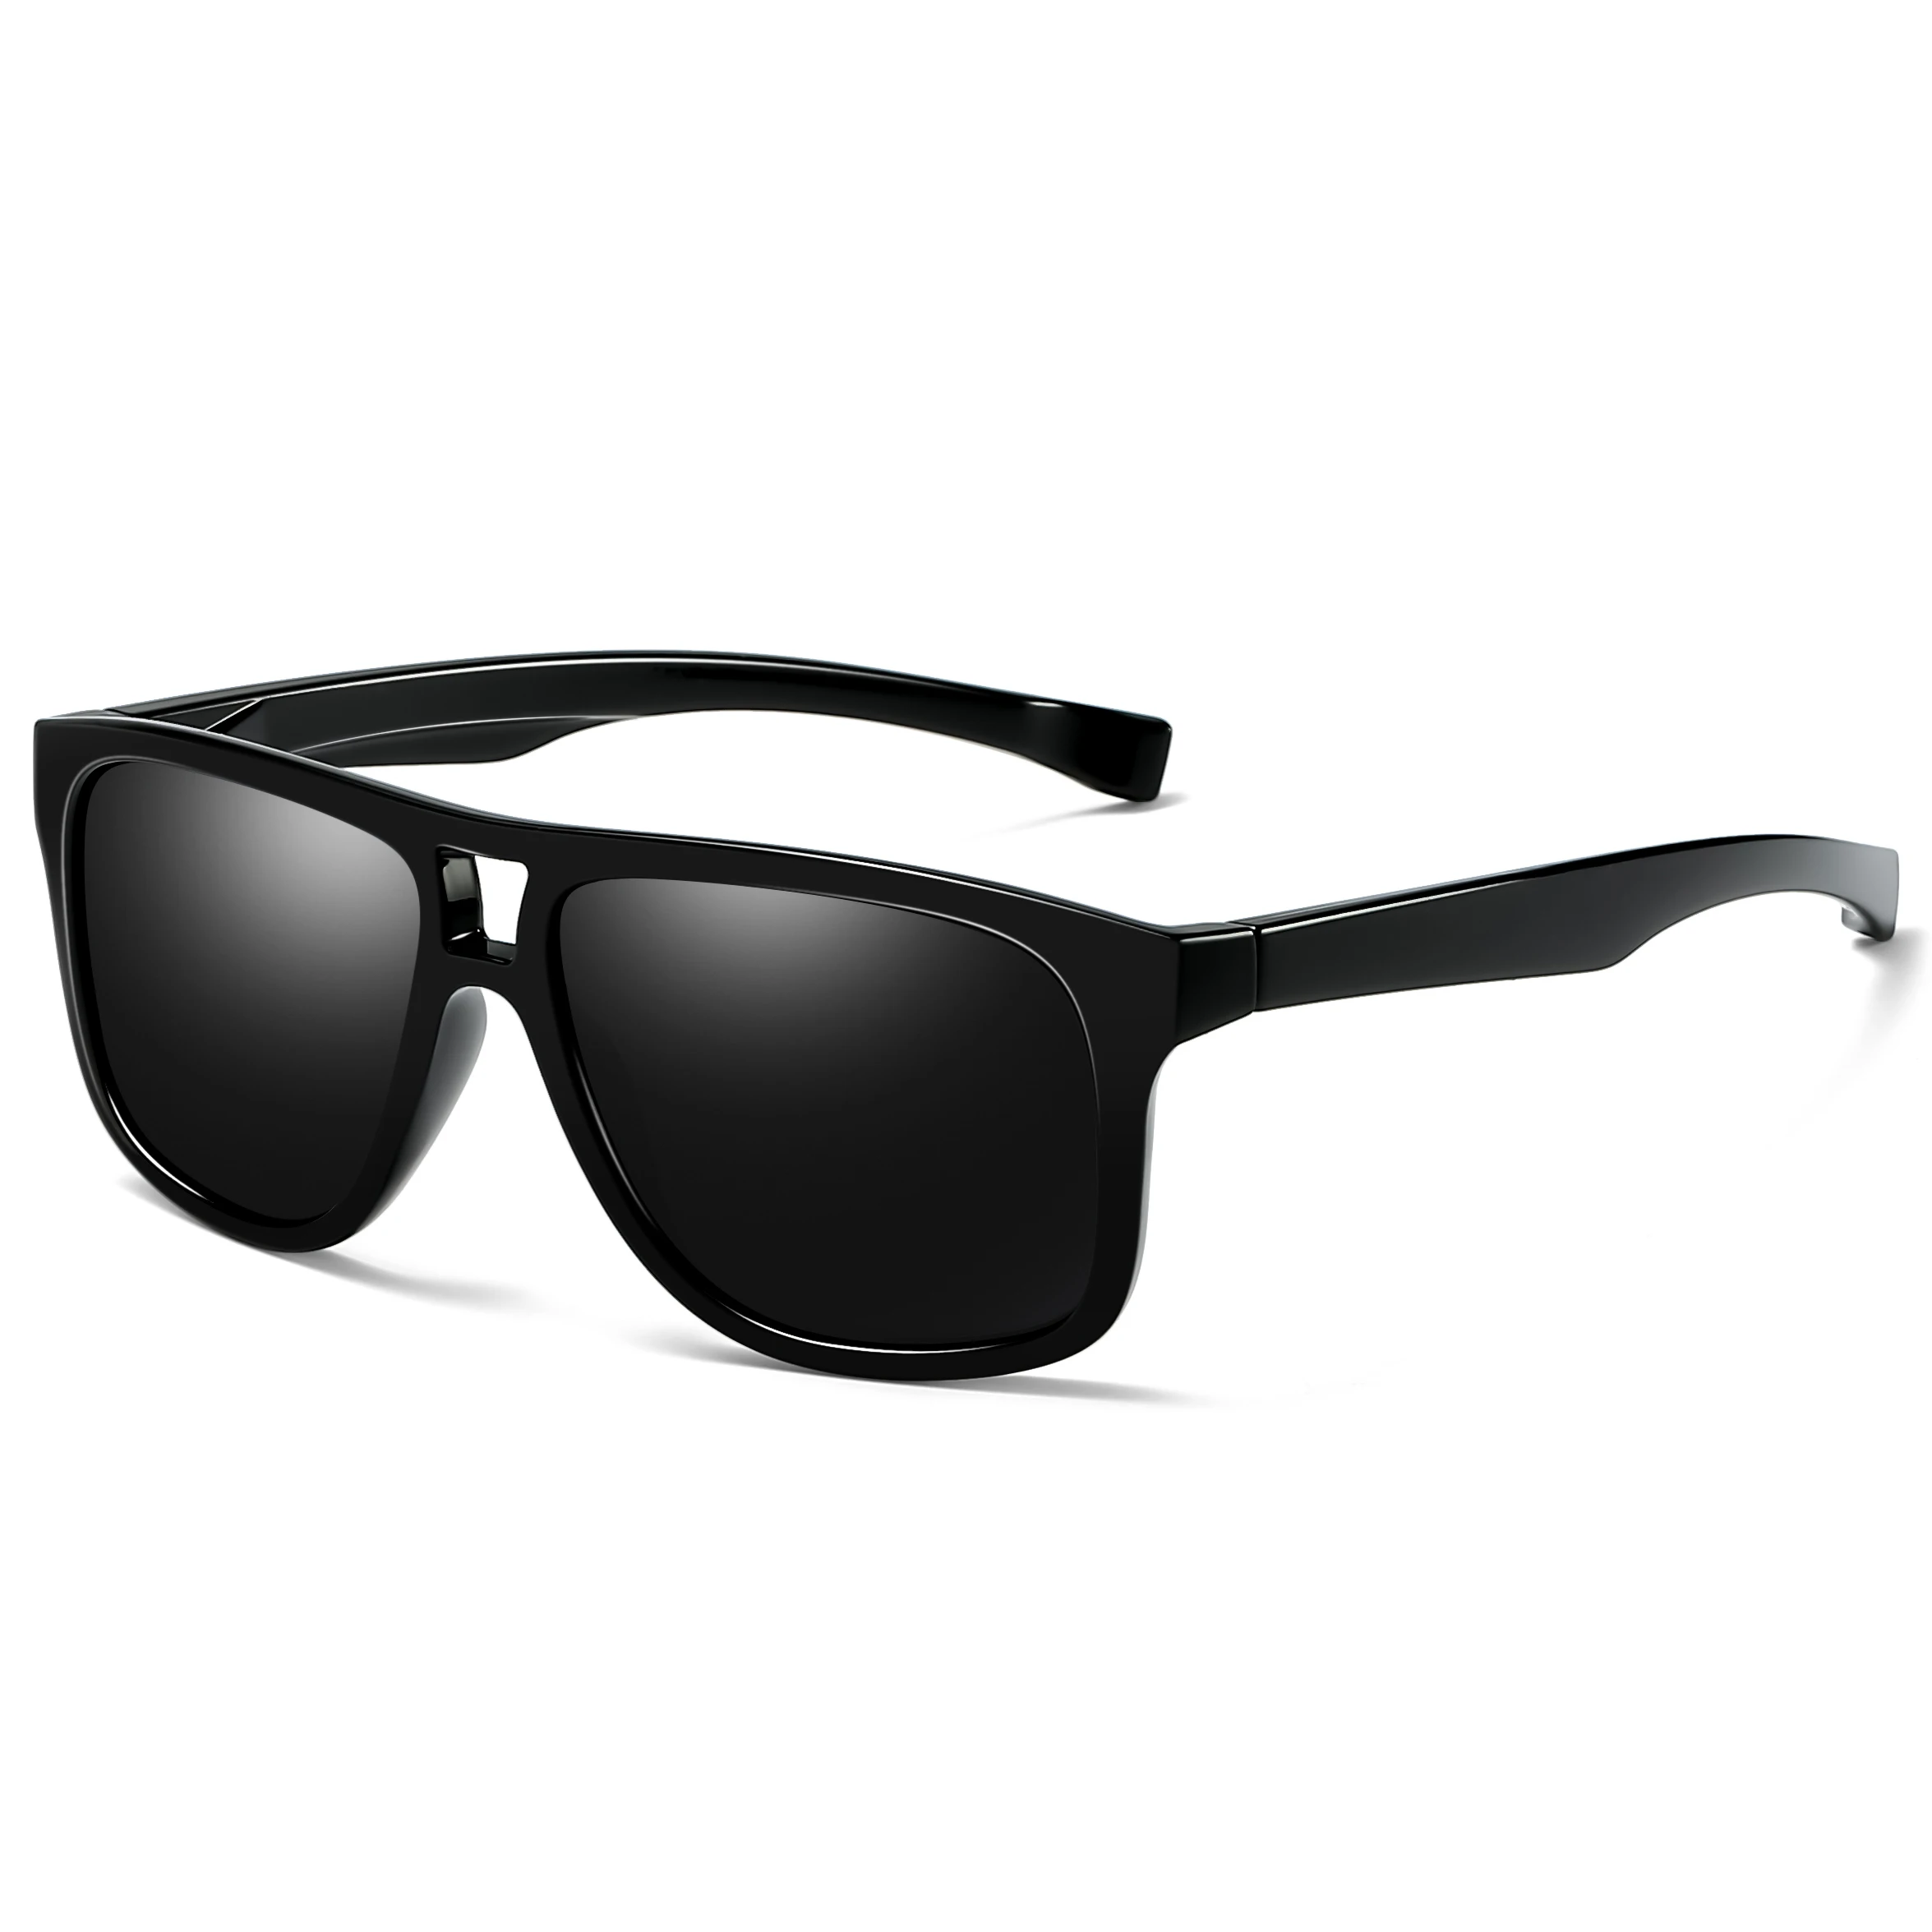 Classic polarized fishing sunglasses for Women Men UV Protection Sunglasses